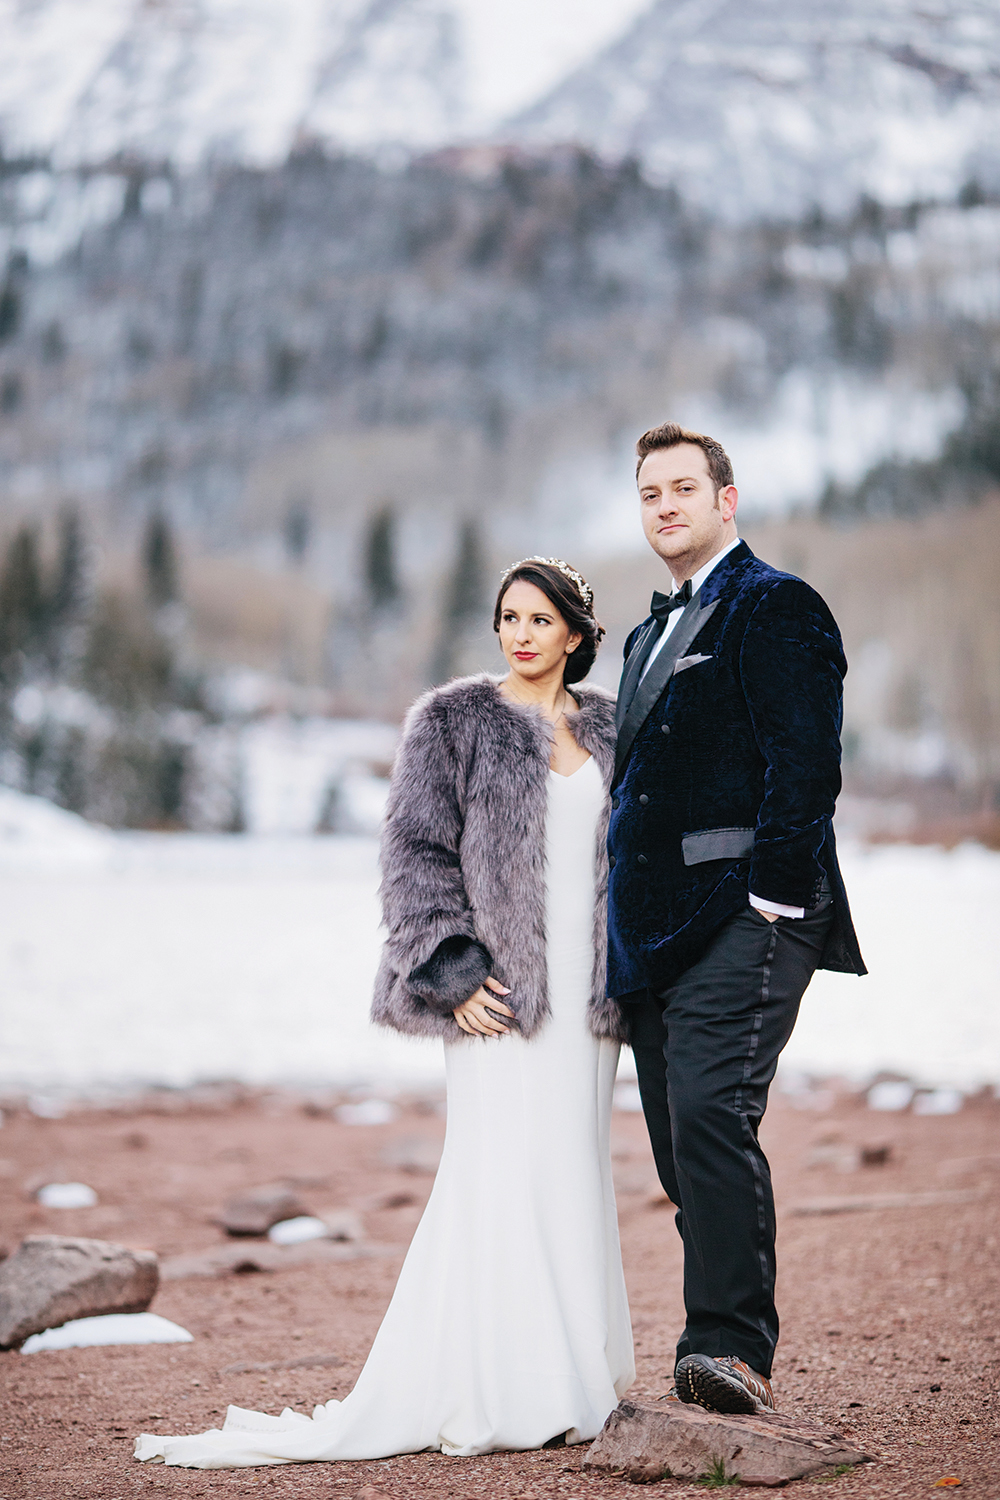 outdoor wedding photo - snow - mountains